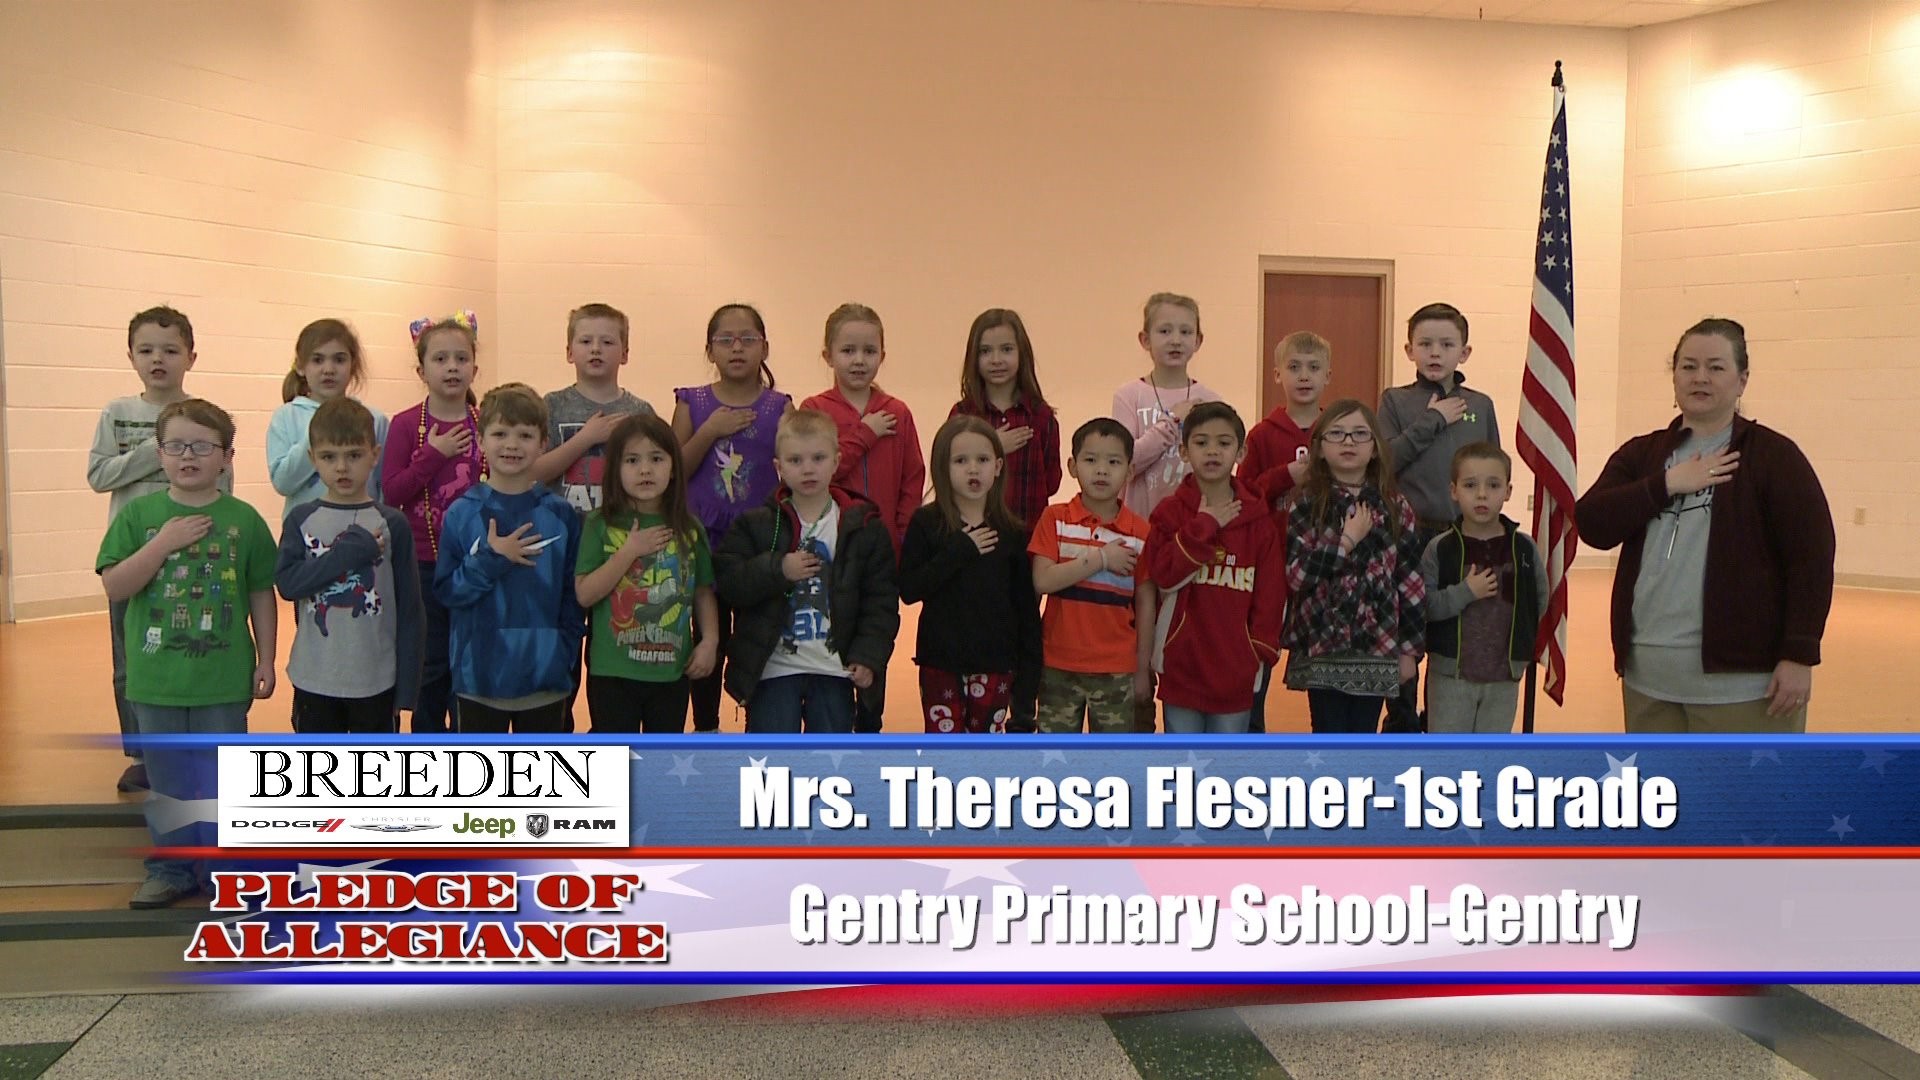 Mrs. Theresa Flesner  1st Grade  Gentry Primary School  Gentry